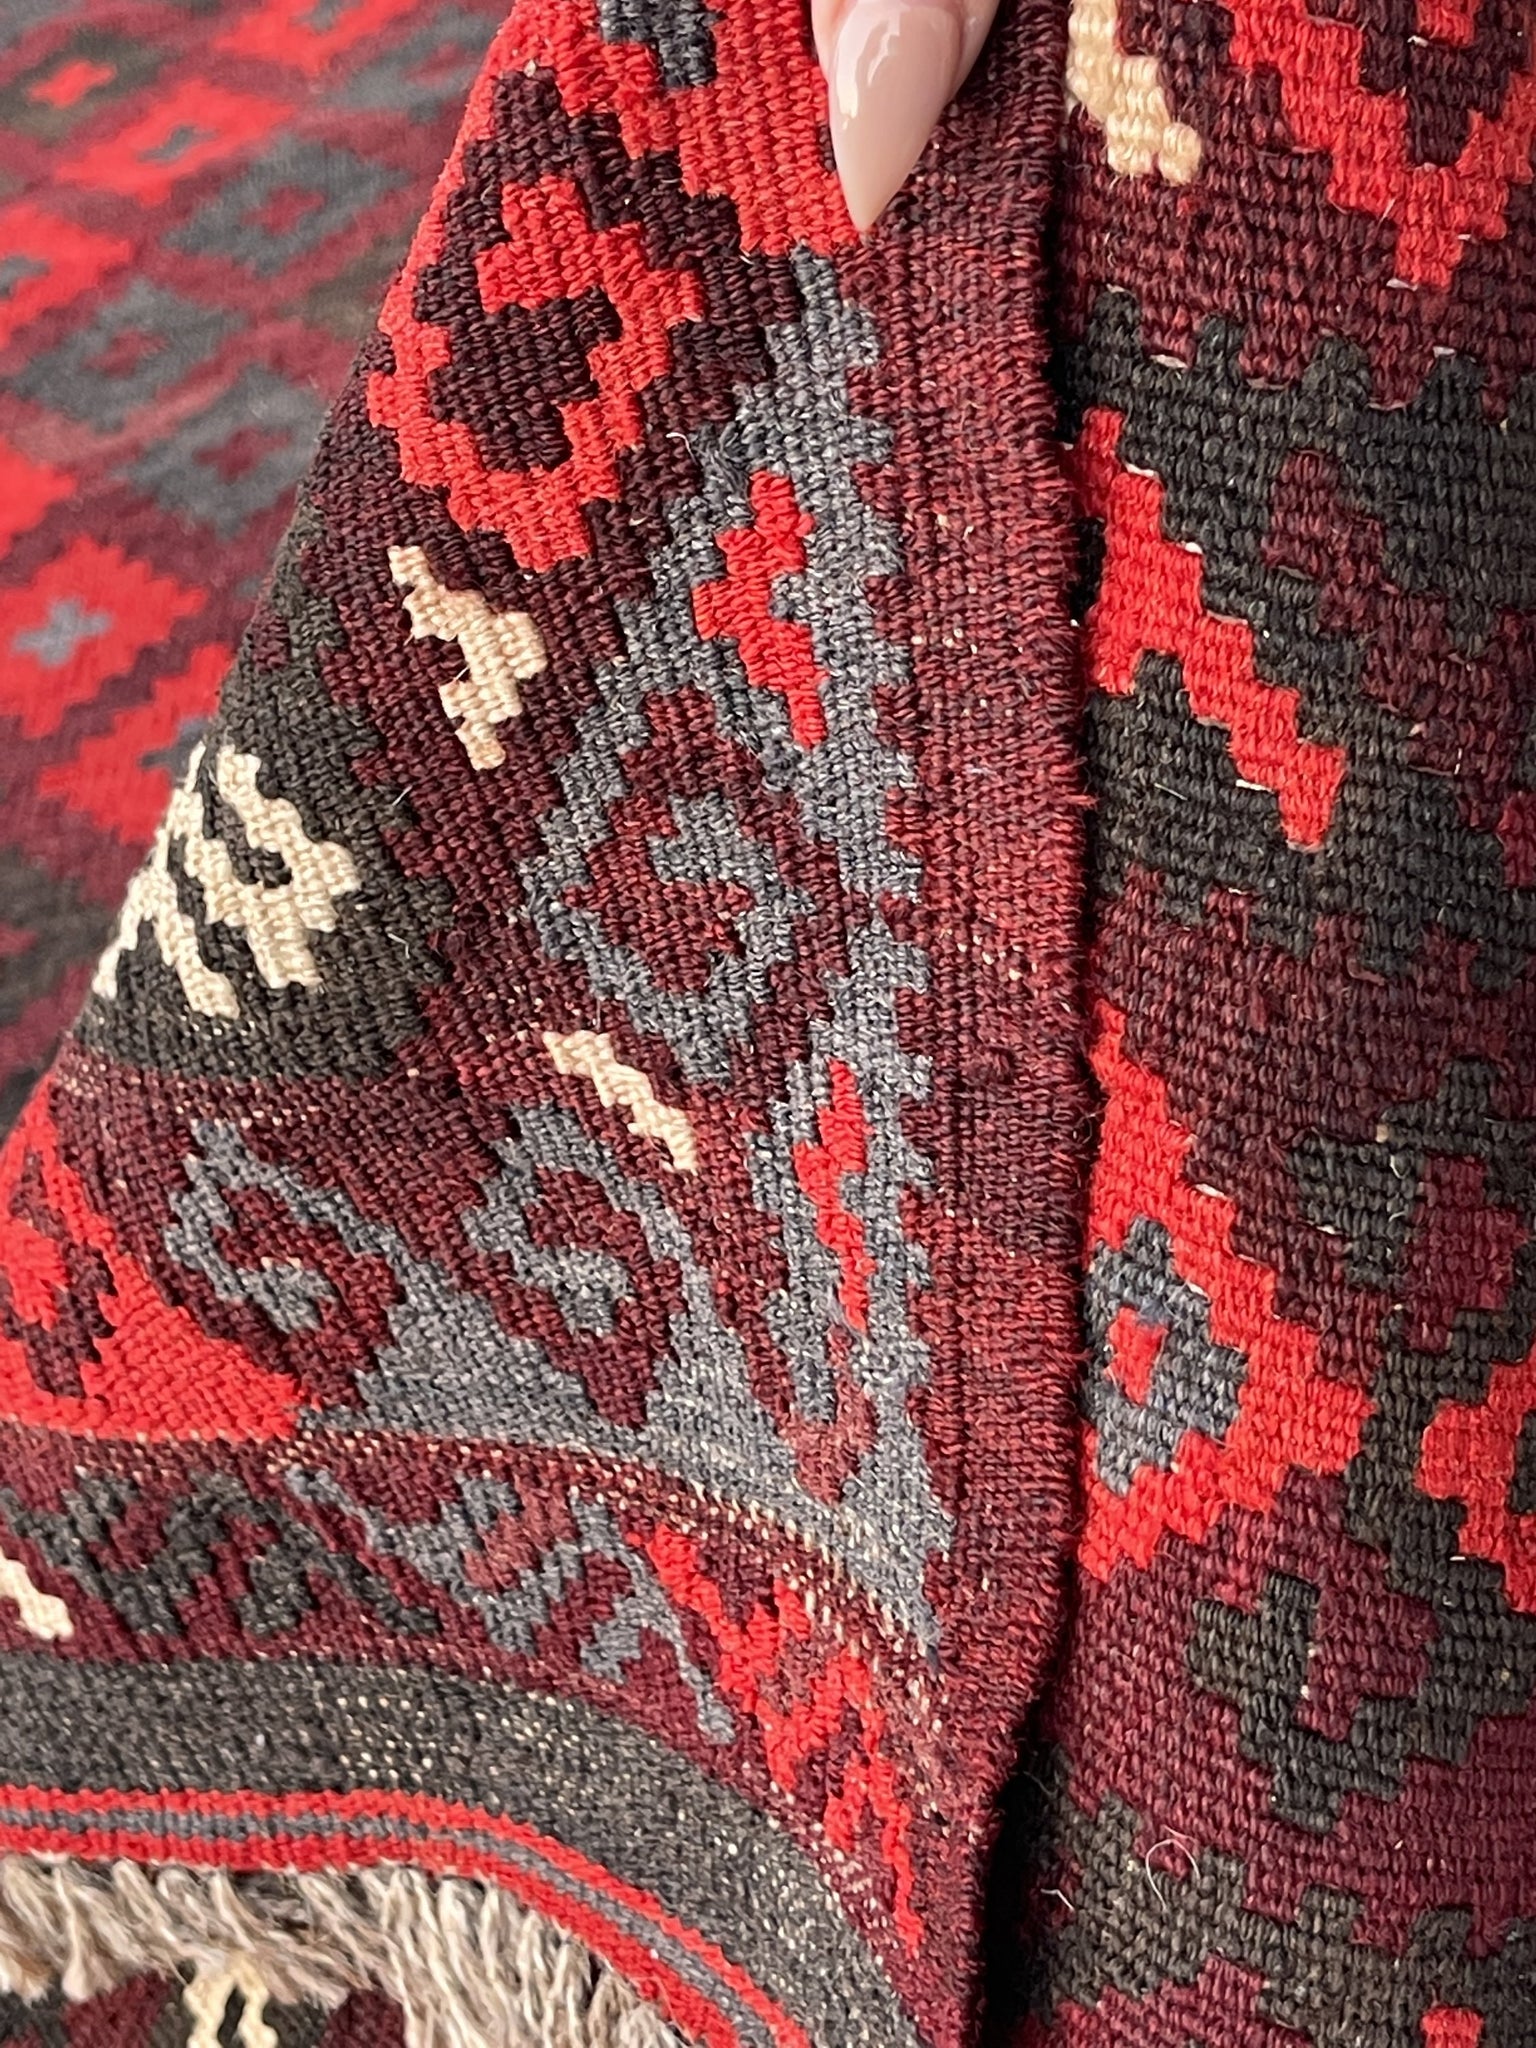 6x10 (180x300) Orange Red White Navy Blue Black Kilim Flatweave Vintage Afghan Rug | Boho Bohemian Outdoor Tribal Turkish Moroccan Nomadic